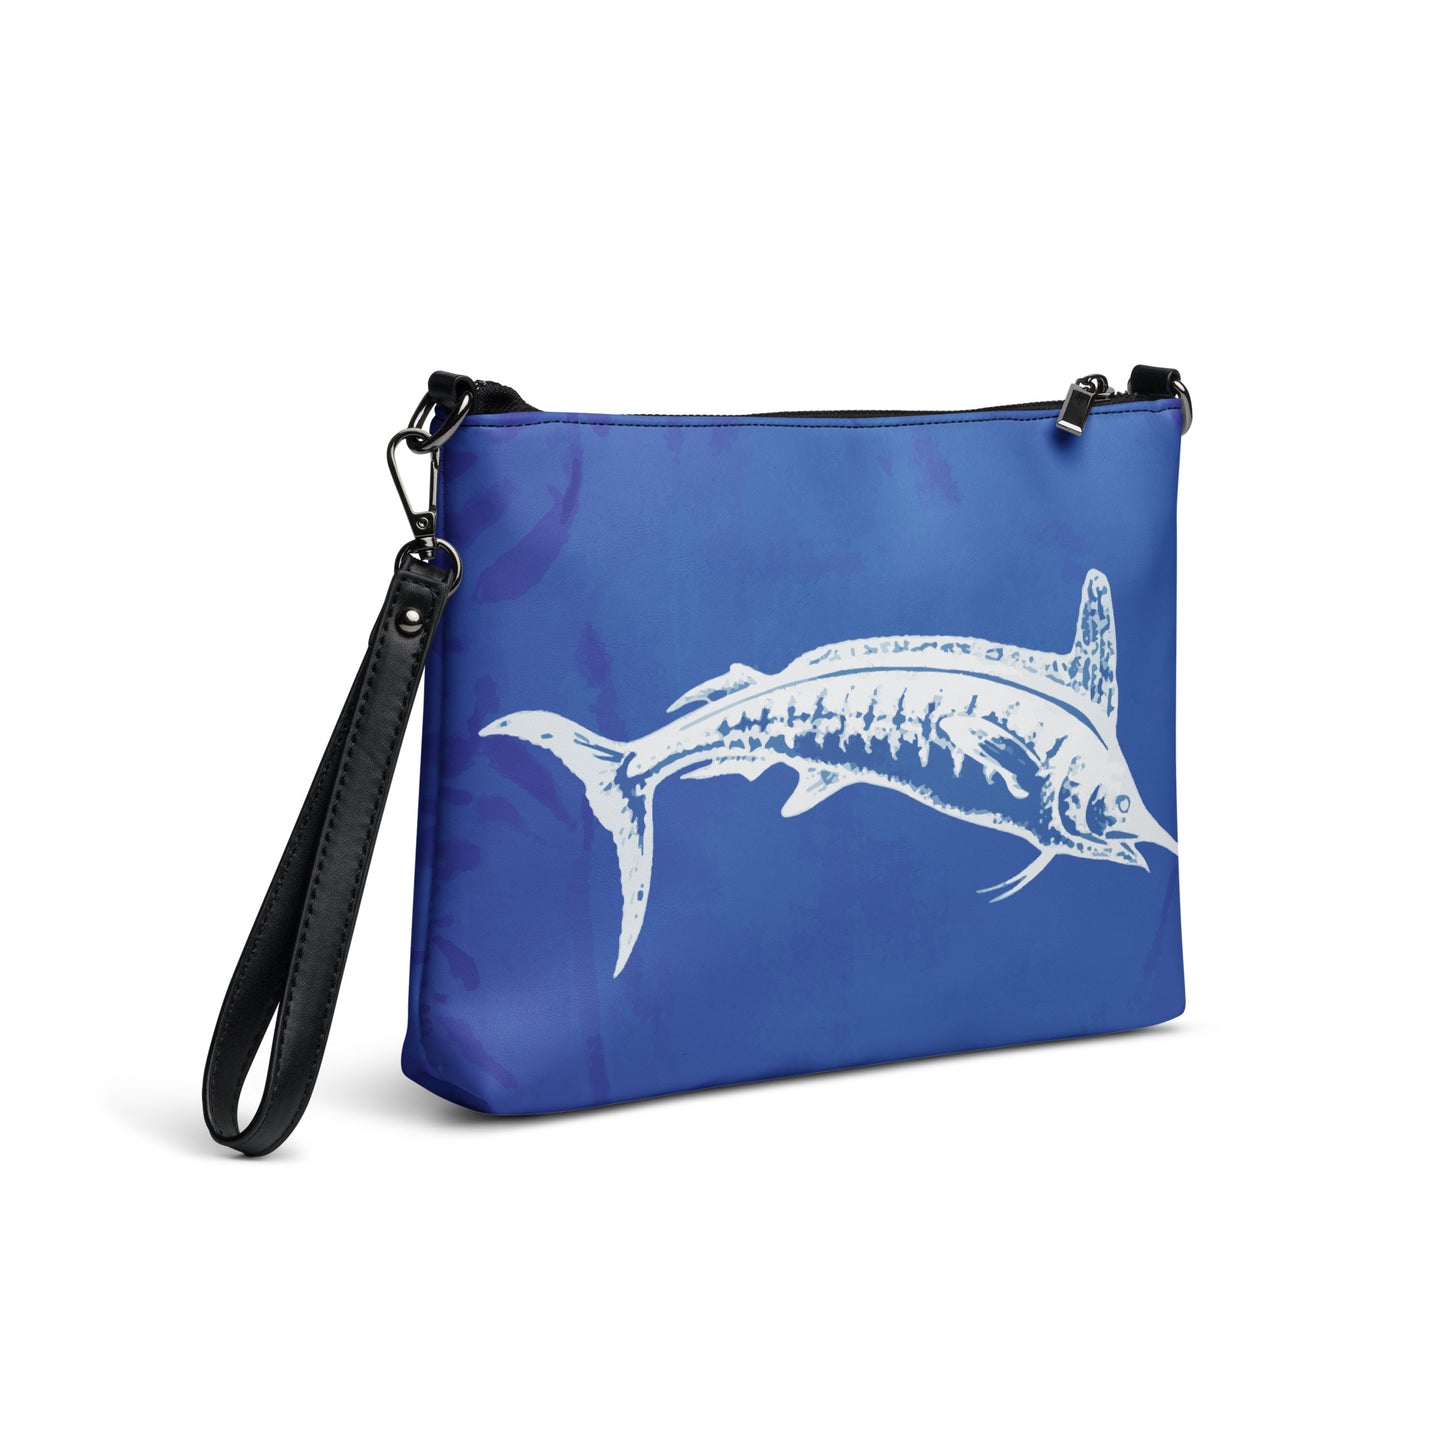 White Marlin Release Crossbody bag